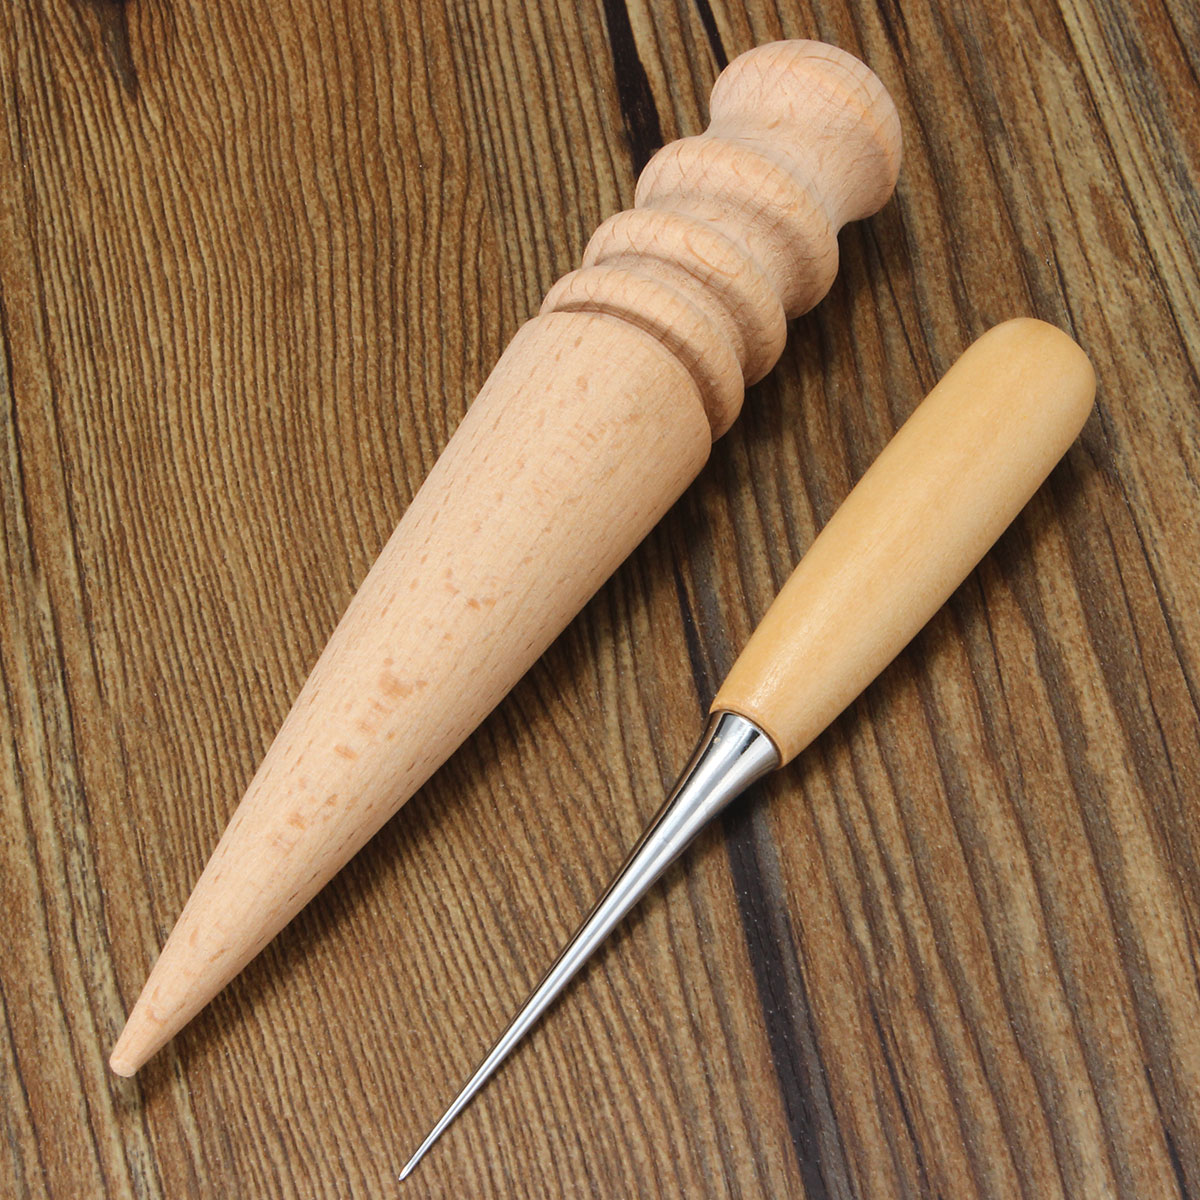 Leather-Craft-Hand-Awl-Punch-Wood-Stick-Tool-Polishing-DIY-Tool-1090360-1